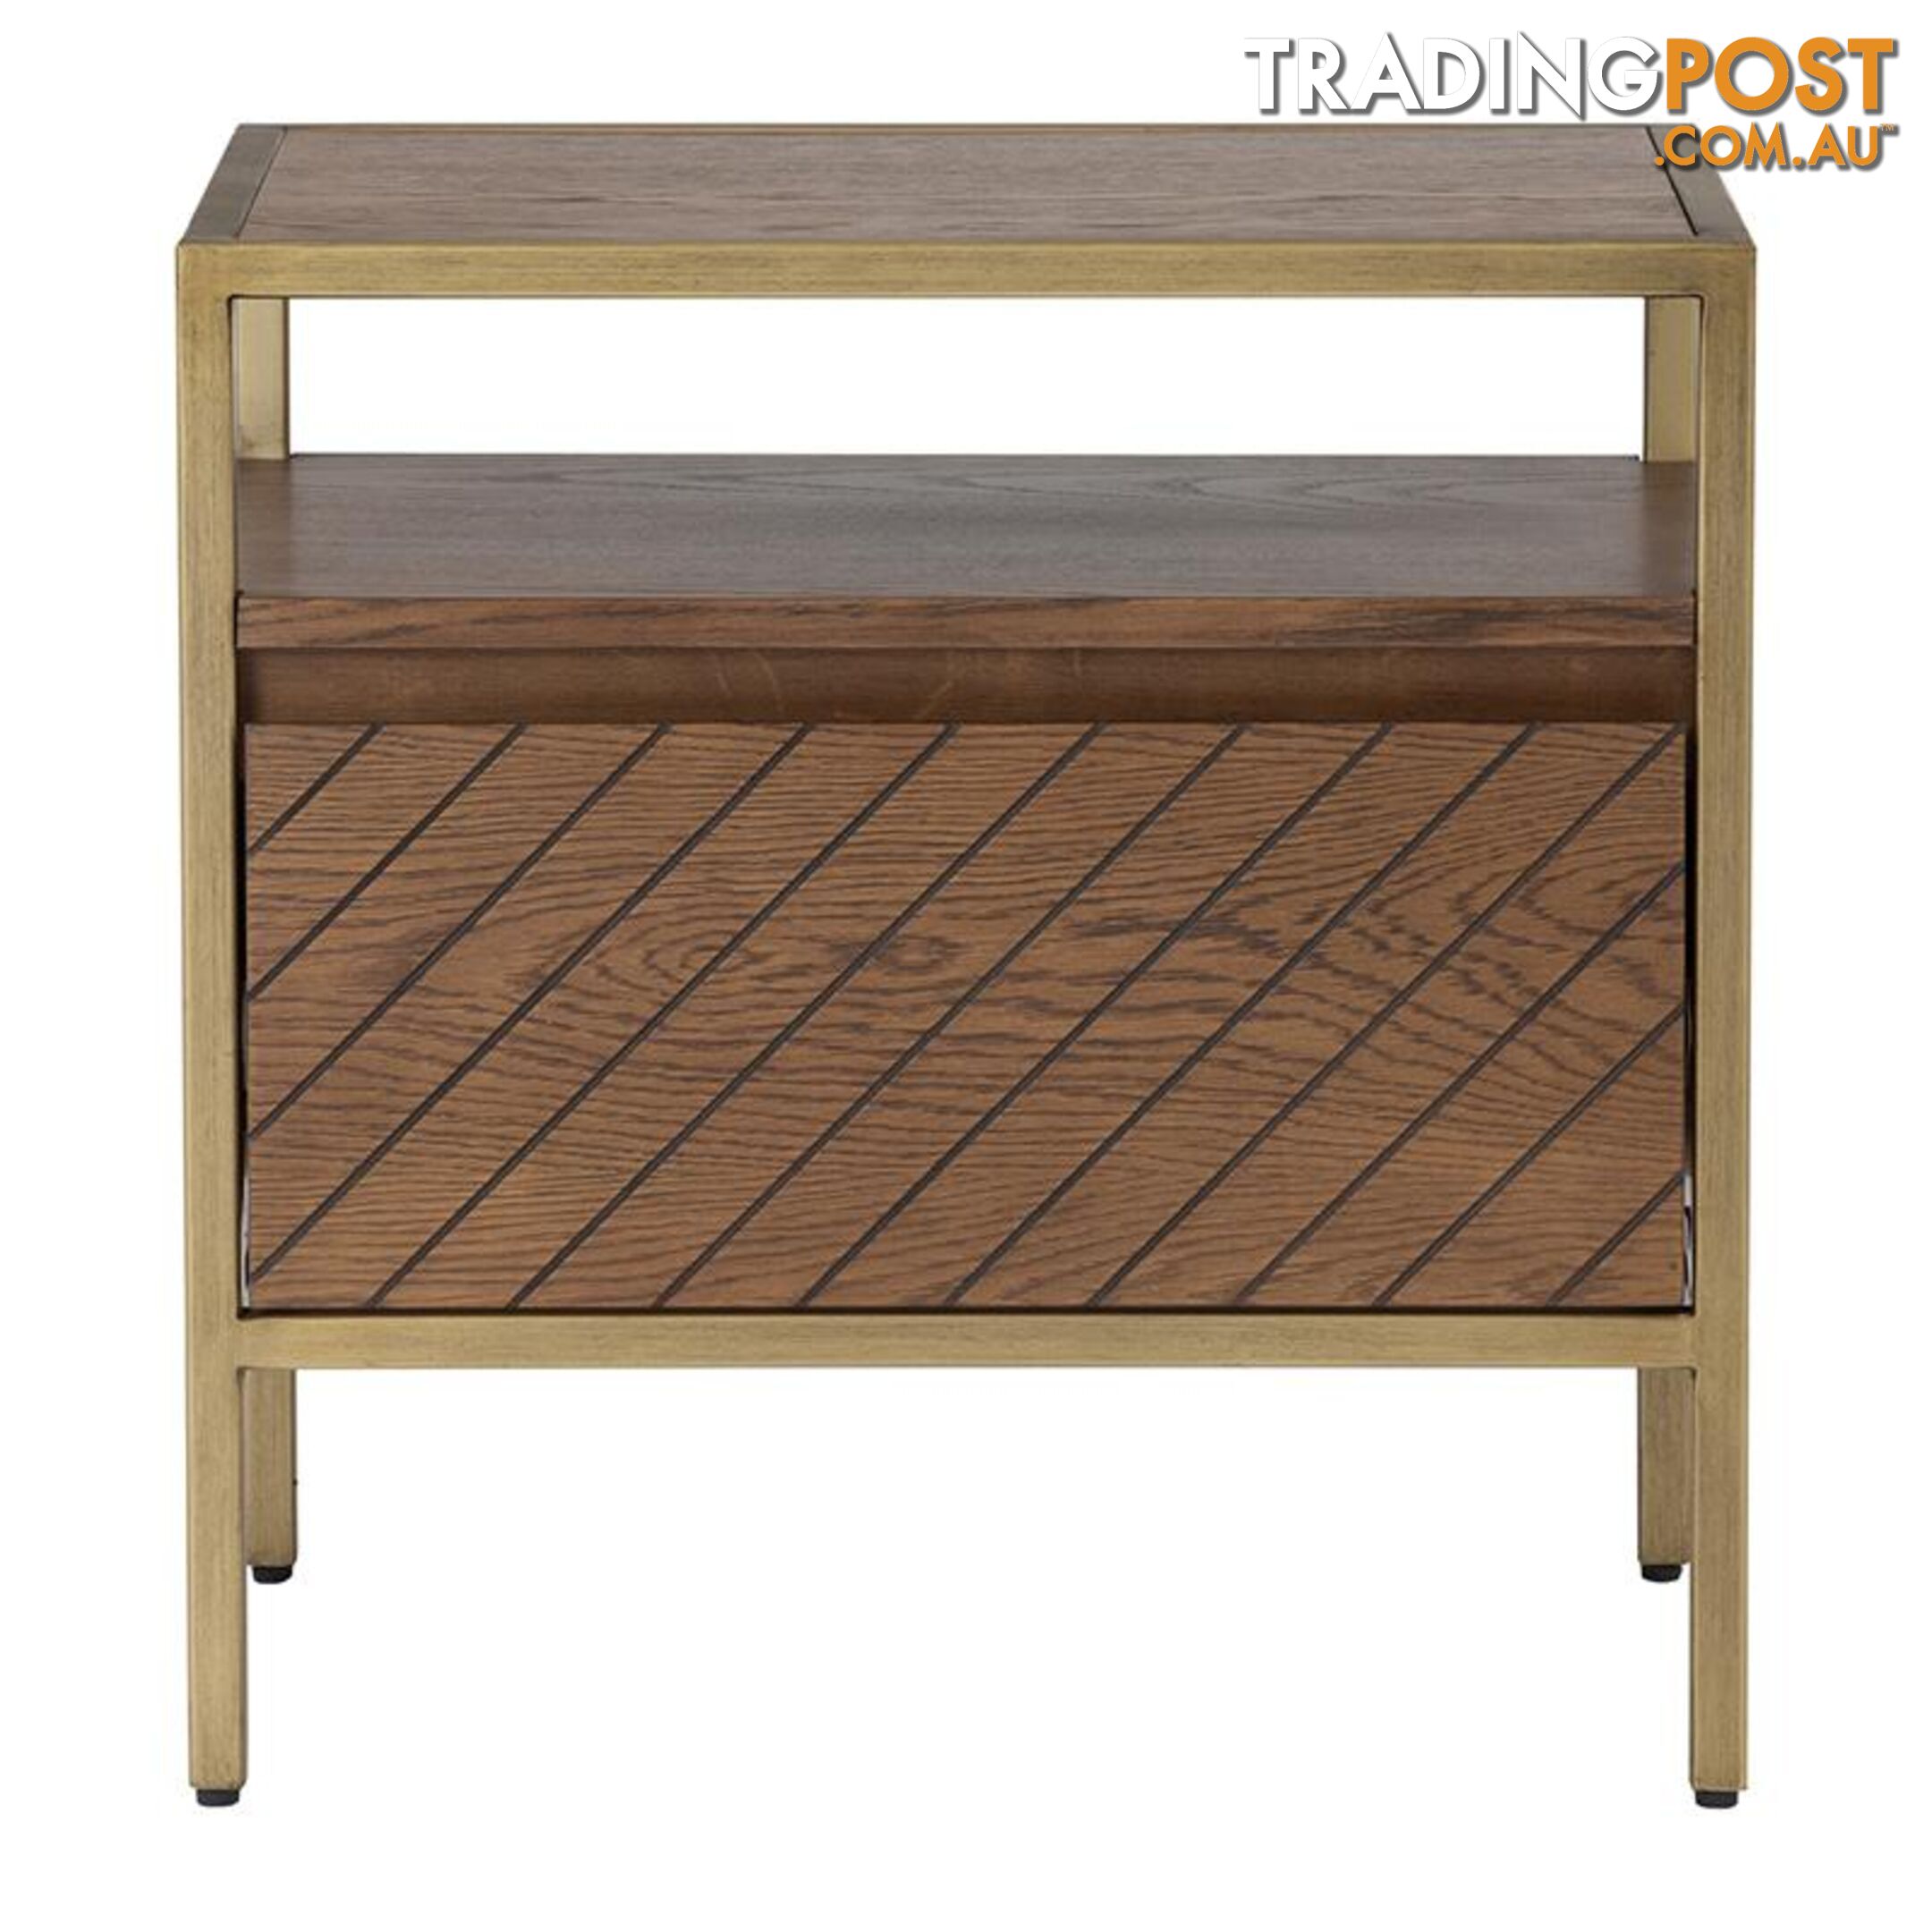 WILLINGHAM Bedside Table - Brass & Wood - 151019 - 9334719000718